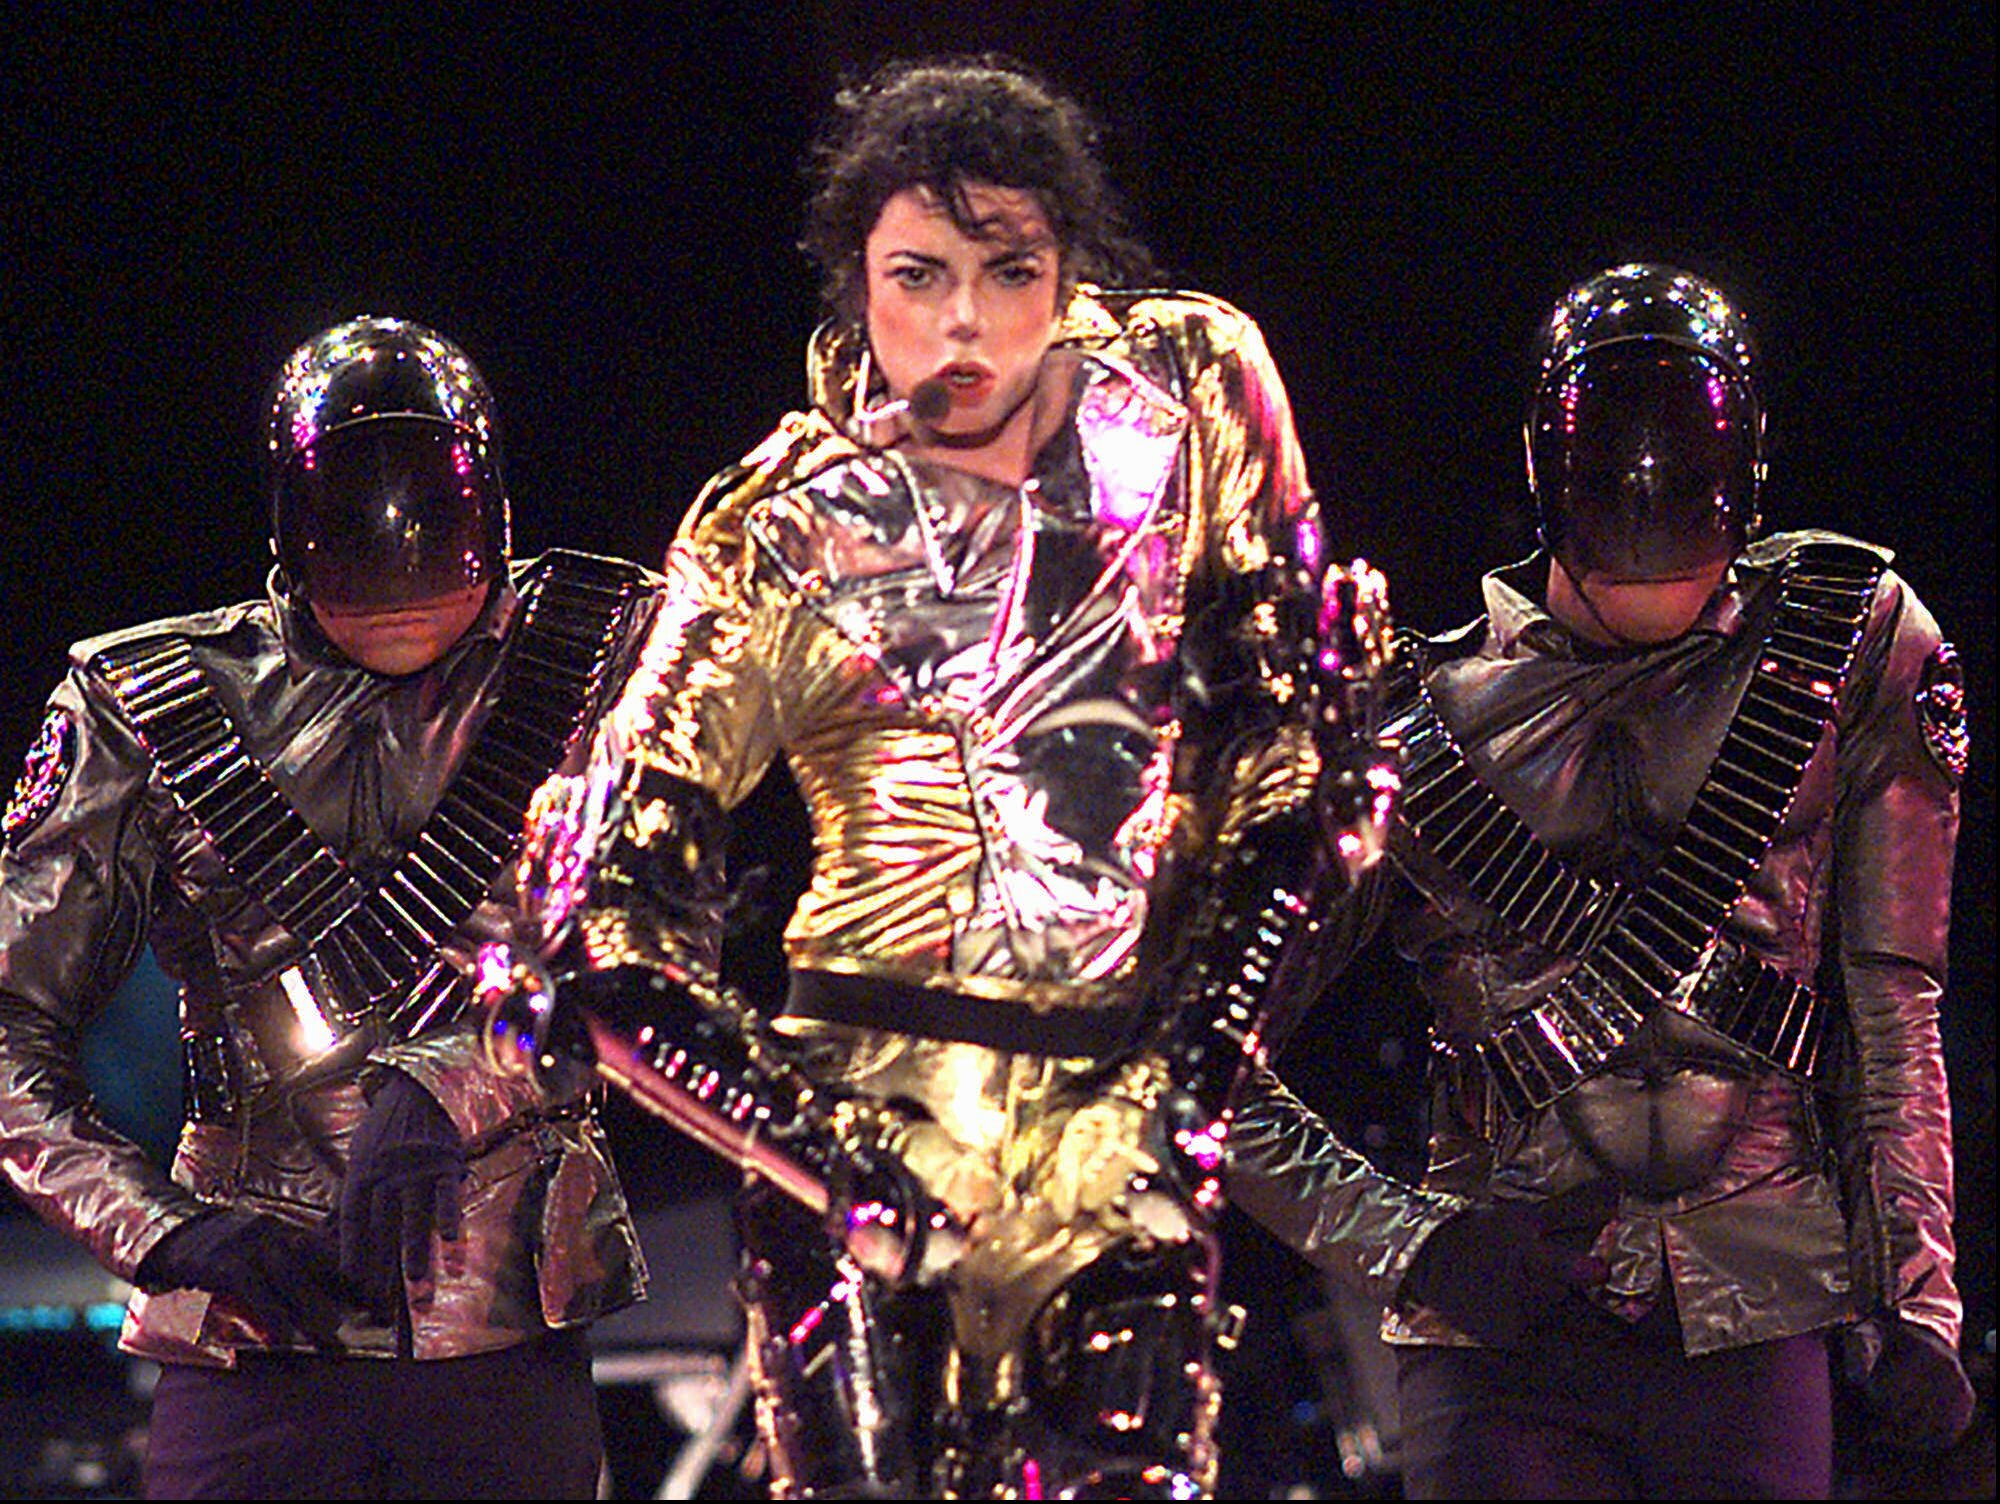 Michael Jackson, King of pop